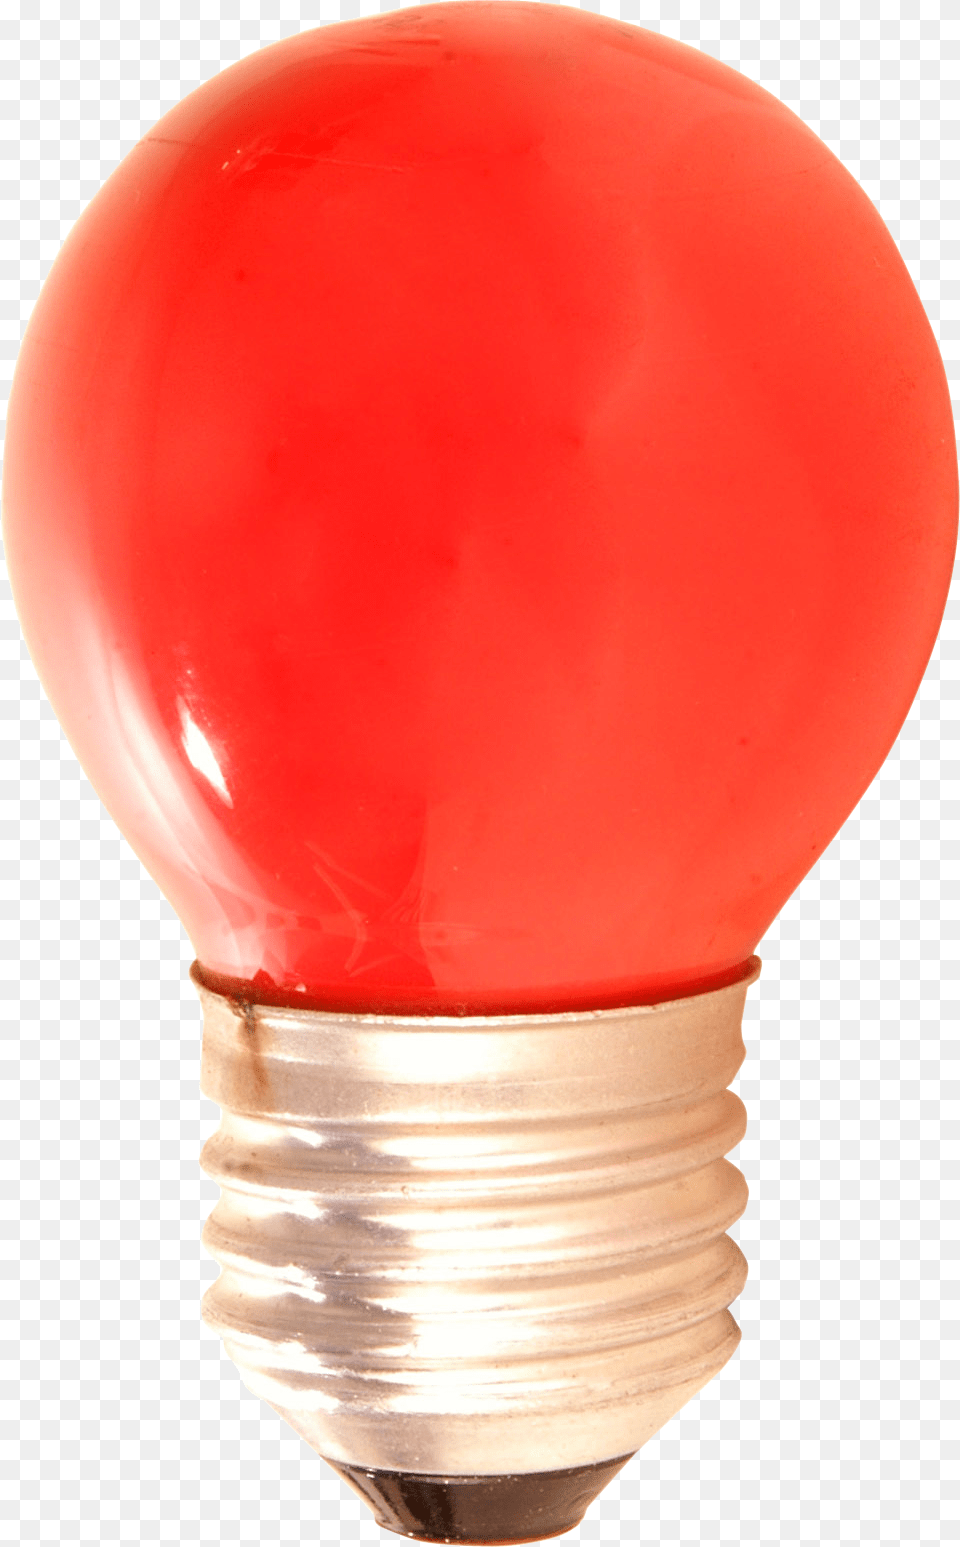 Red Lamp Image Purepng Cc0 Red Lamp, Light, Electronics, Led Free Transparent Png